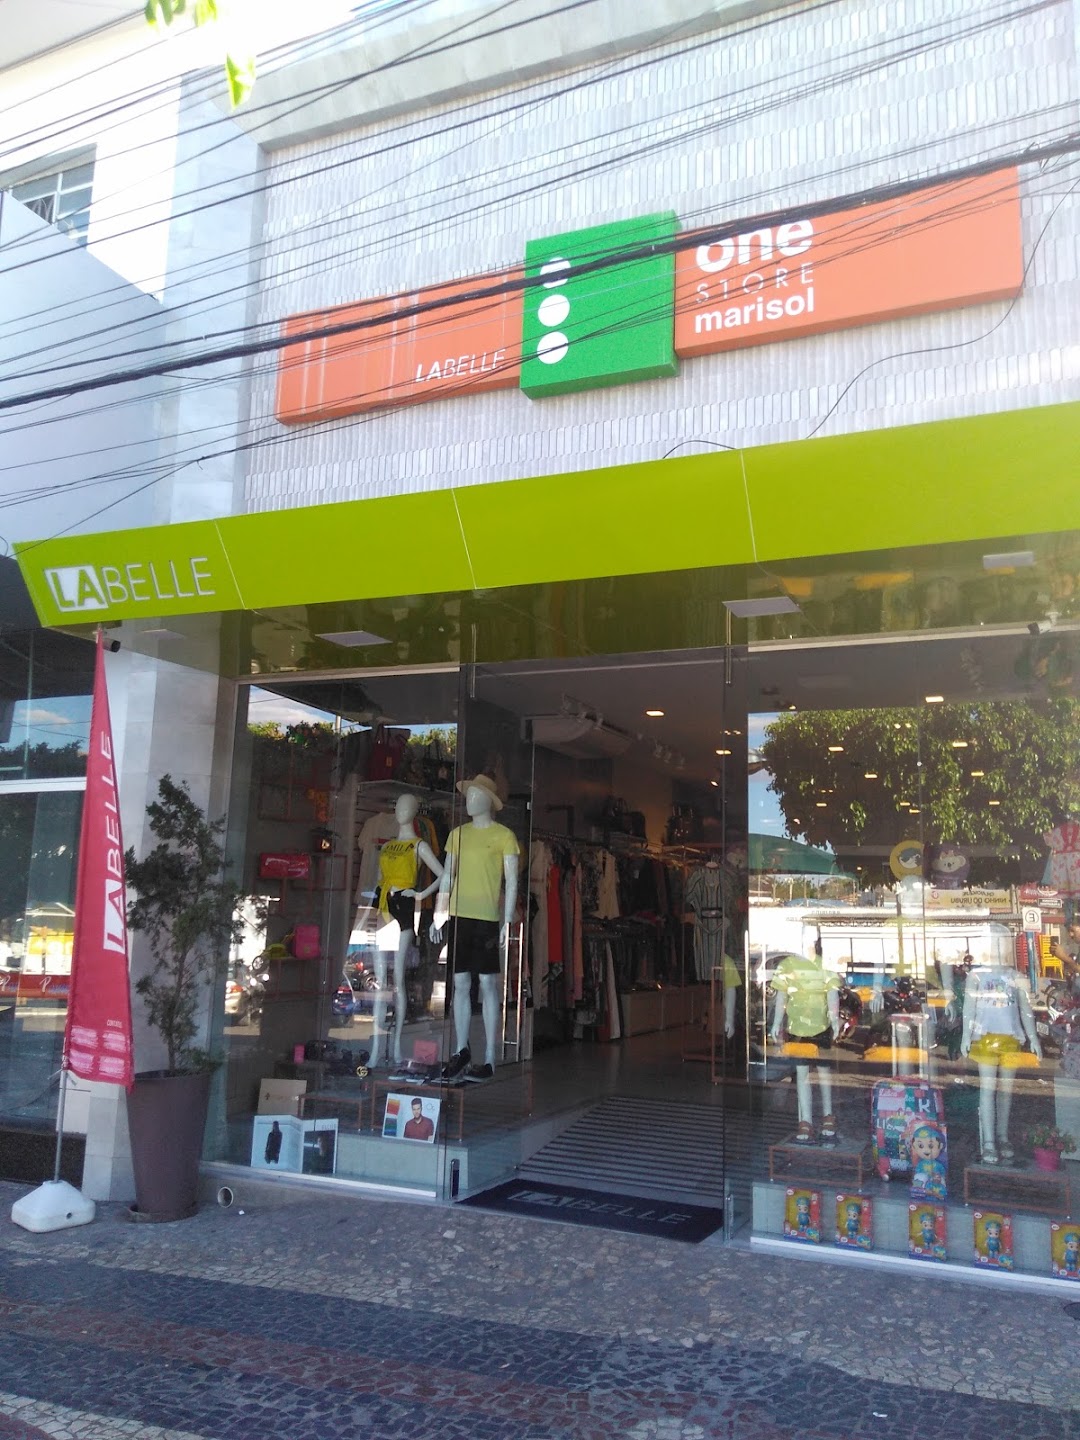 LA BELLE - One Store Marisol - Delmiro Gouveia